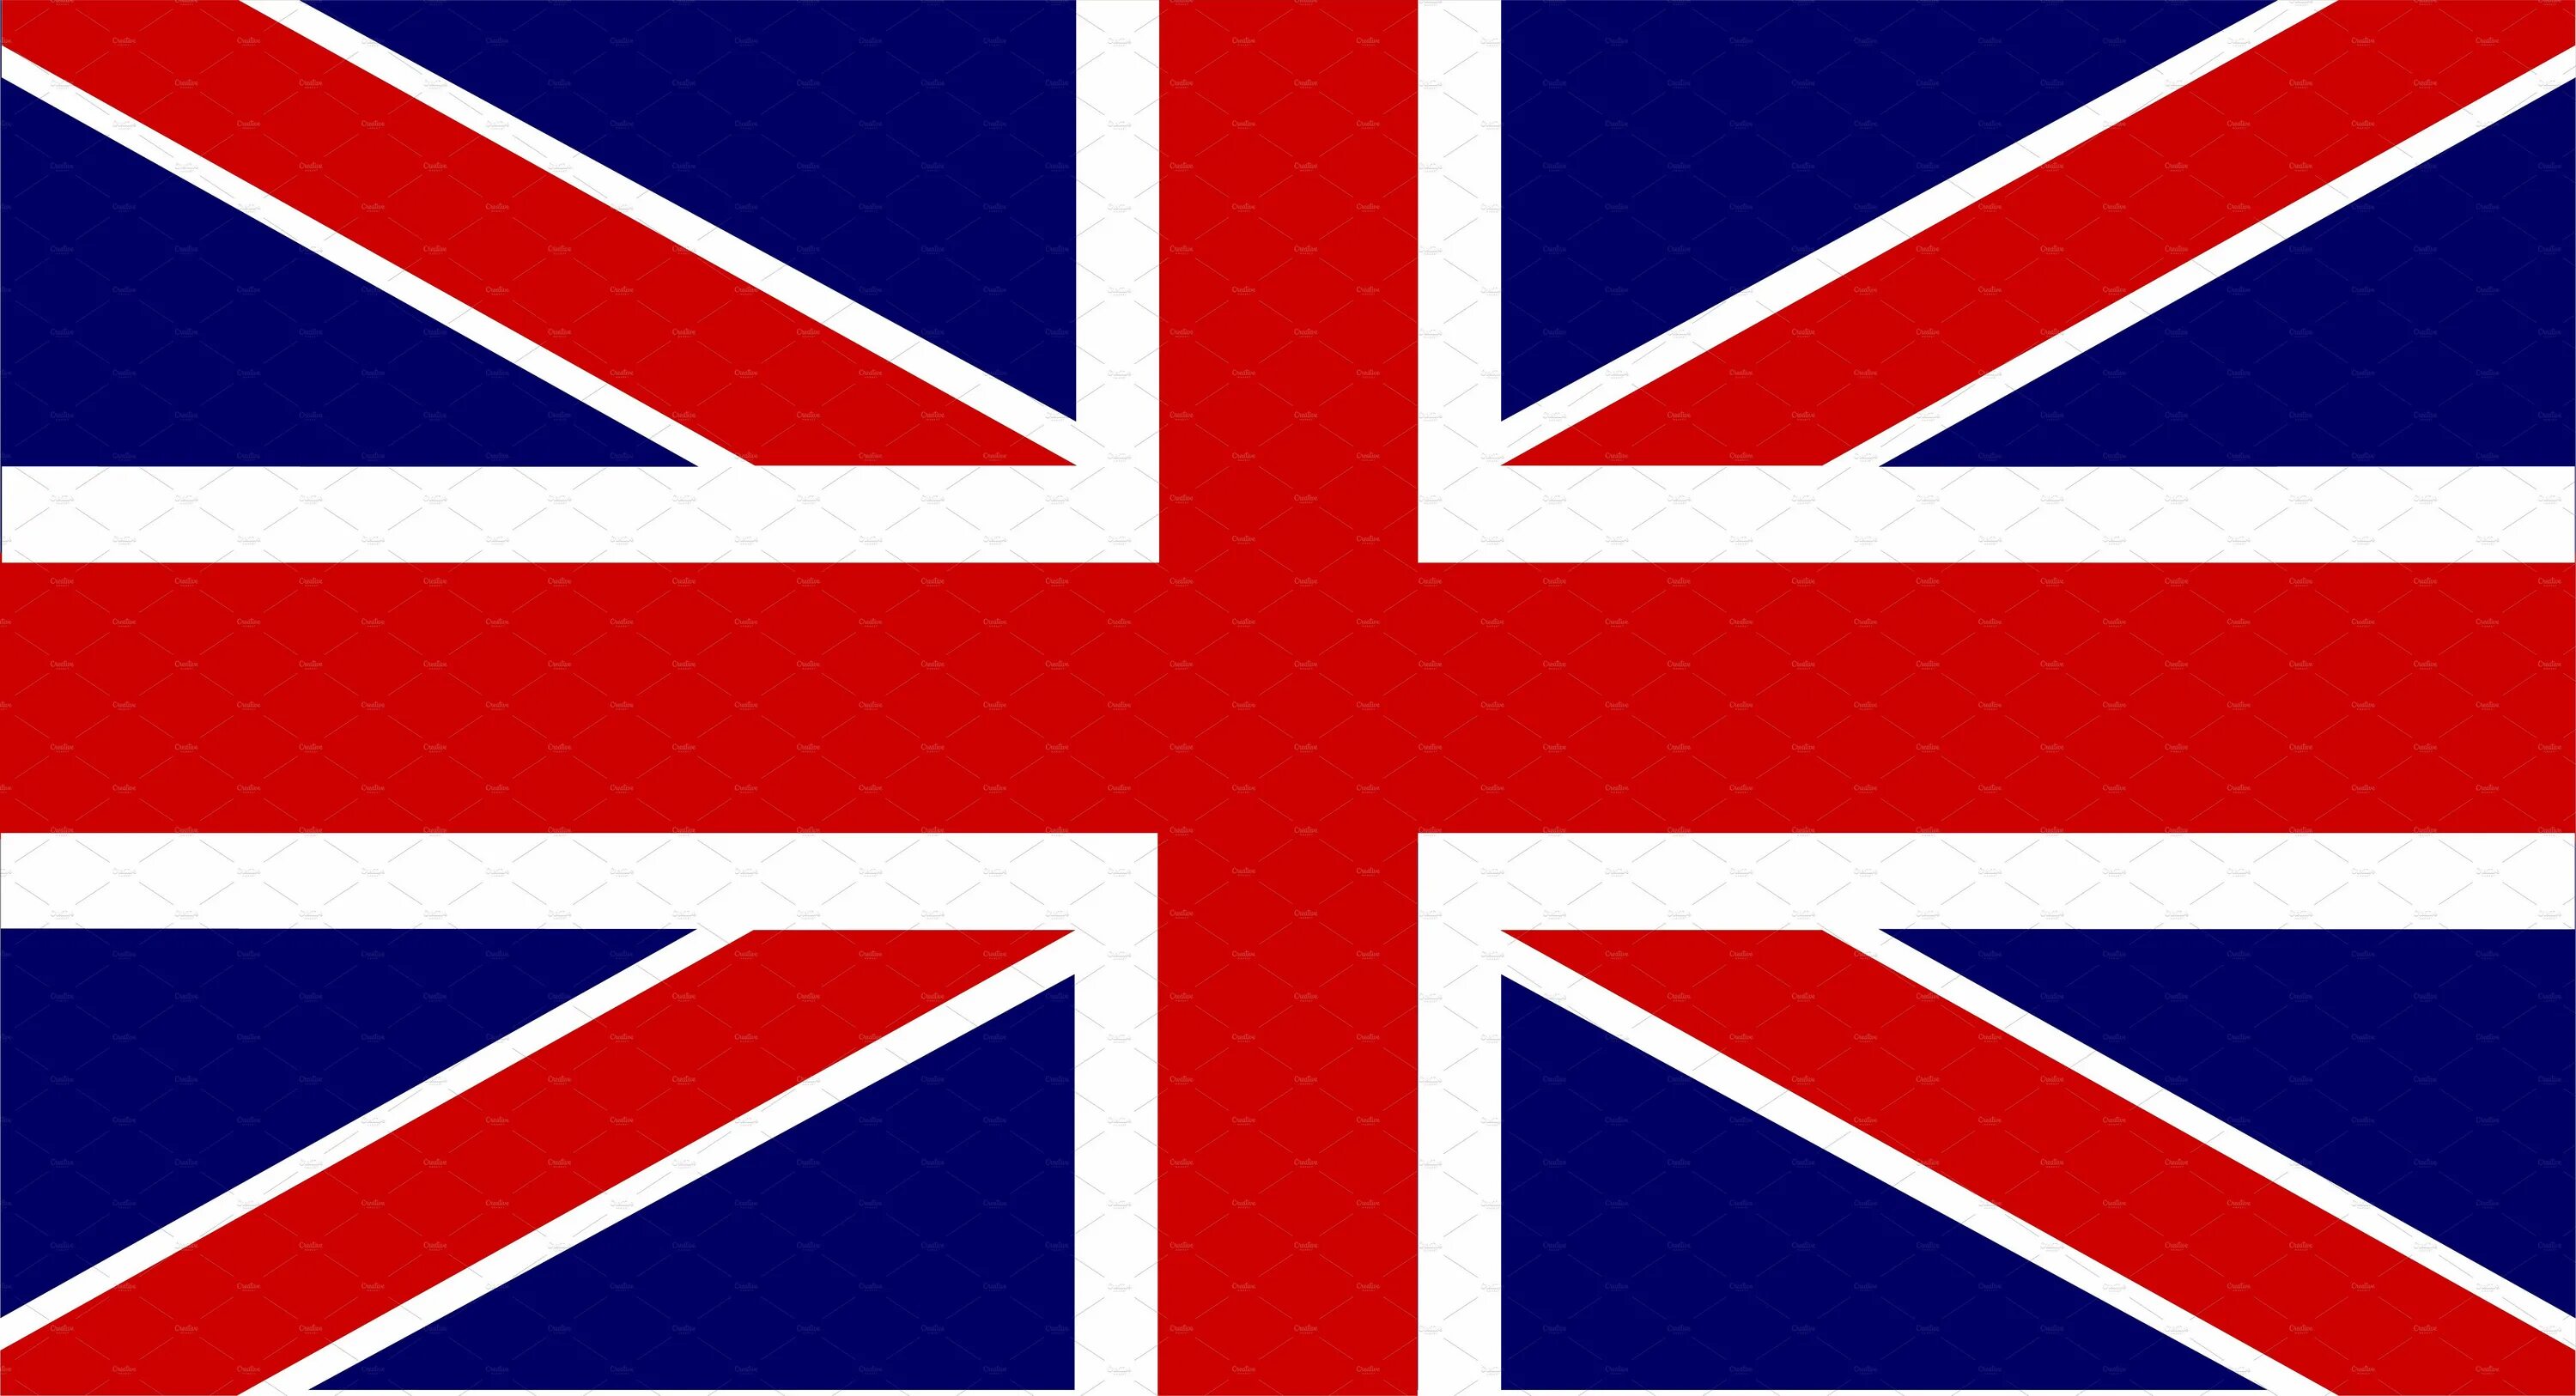 Britain is a nation. Great Britain флаг. Флаг Юнайтед кингдом. Флаг Великобритании 1812. Флаг Великобритании 1812 год.